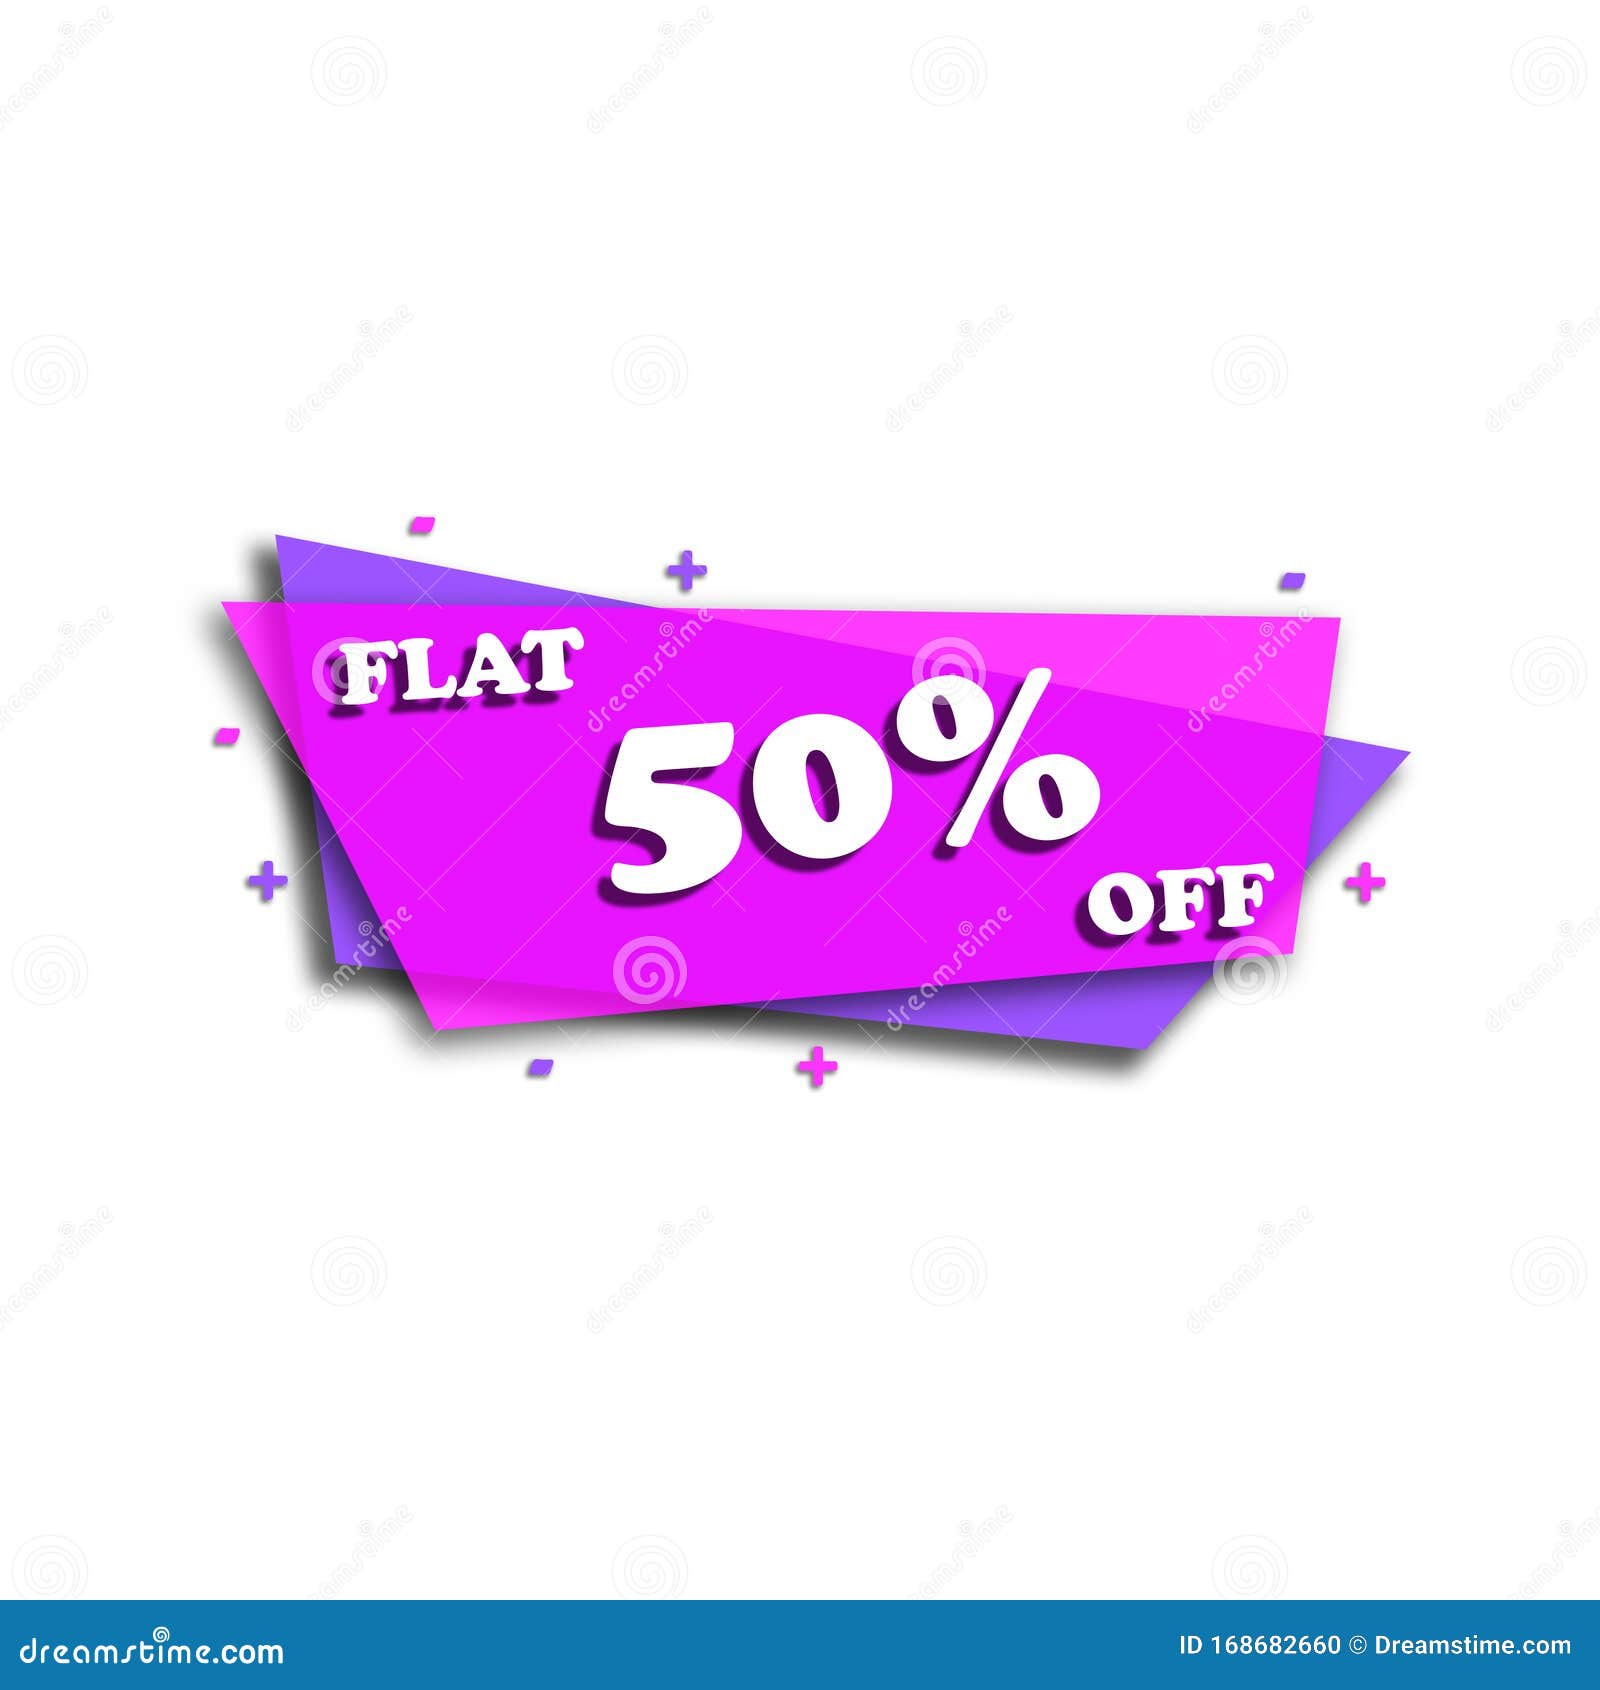 flat-50-off-promotion-label-advertisement-stock-illustration